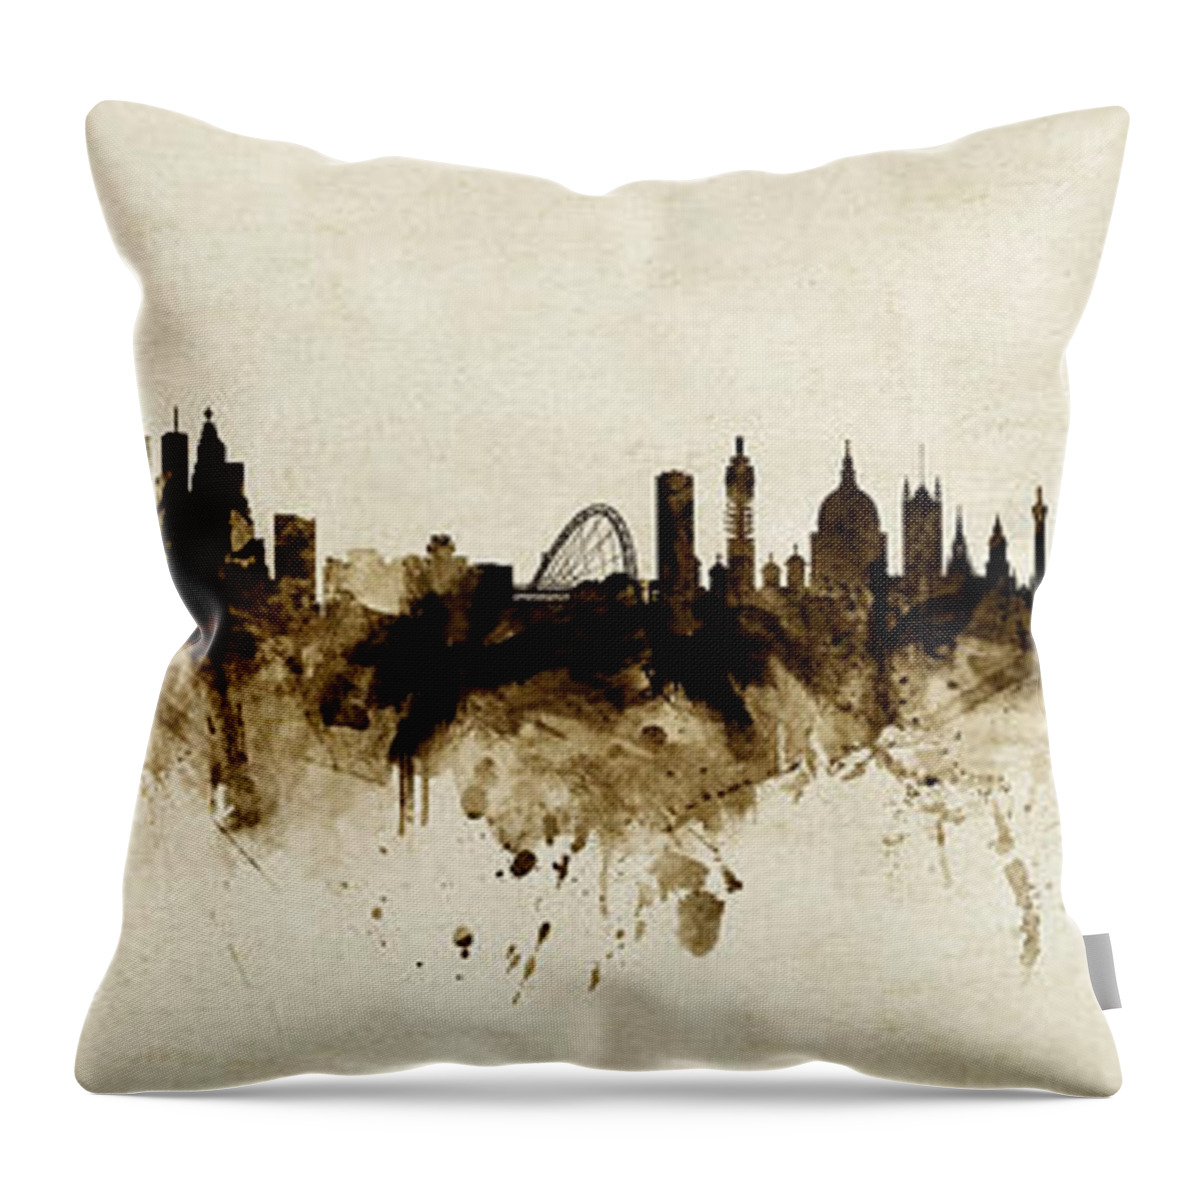 Toronto Throw Pillow featuring the digital art Toronto and London Skylines Mashup Vintage by Michael Tompsett